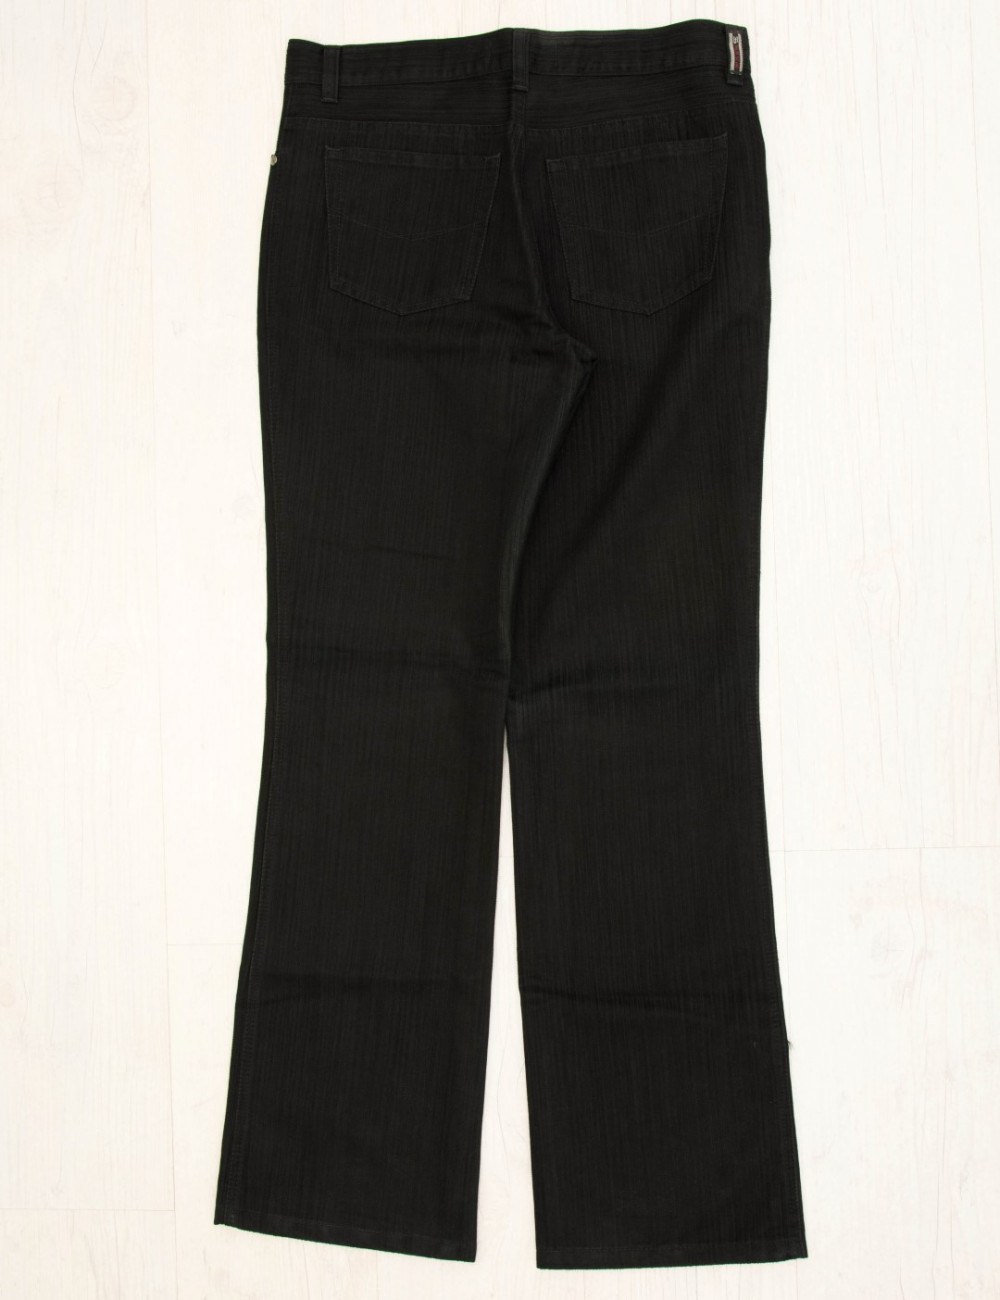 Aνδρικό μαύρο υφασμάτινο παντελόνι με λεπτή ρίγα z15D